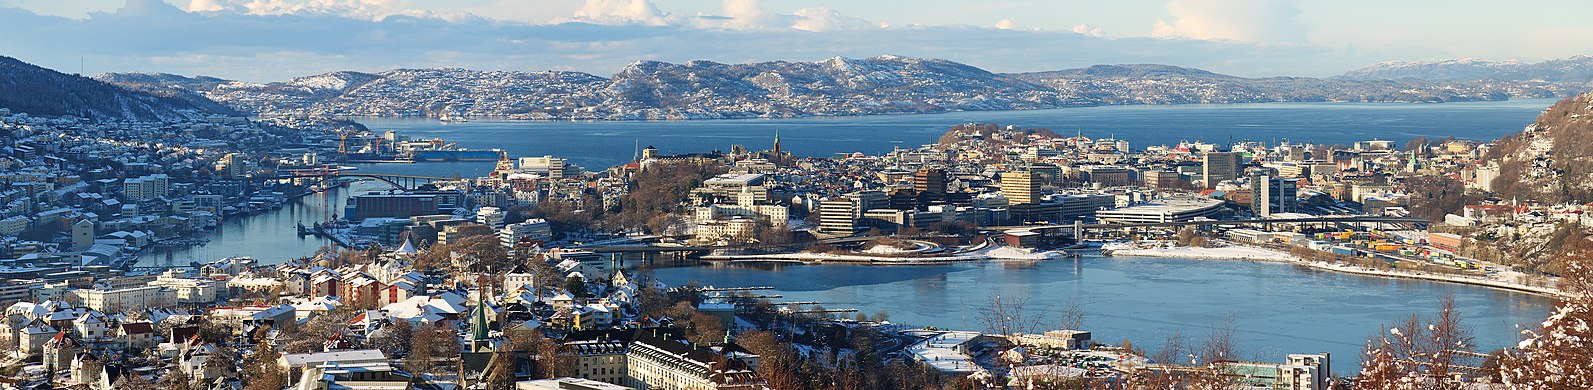 View towards the city centre of Bergen from Lægdene at Landås